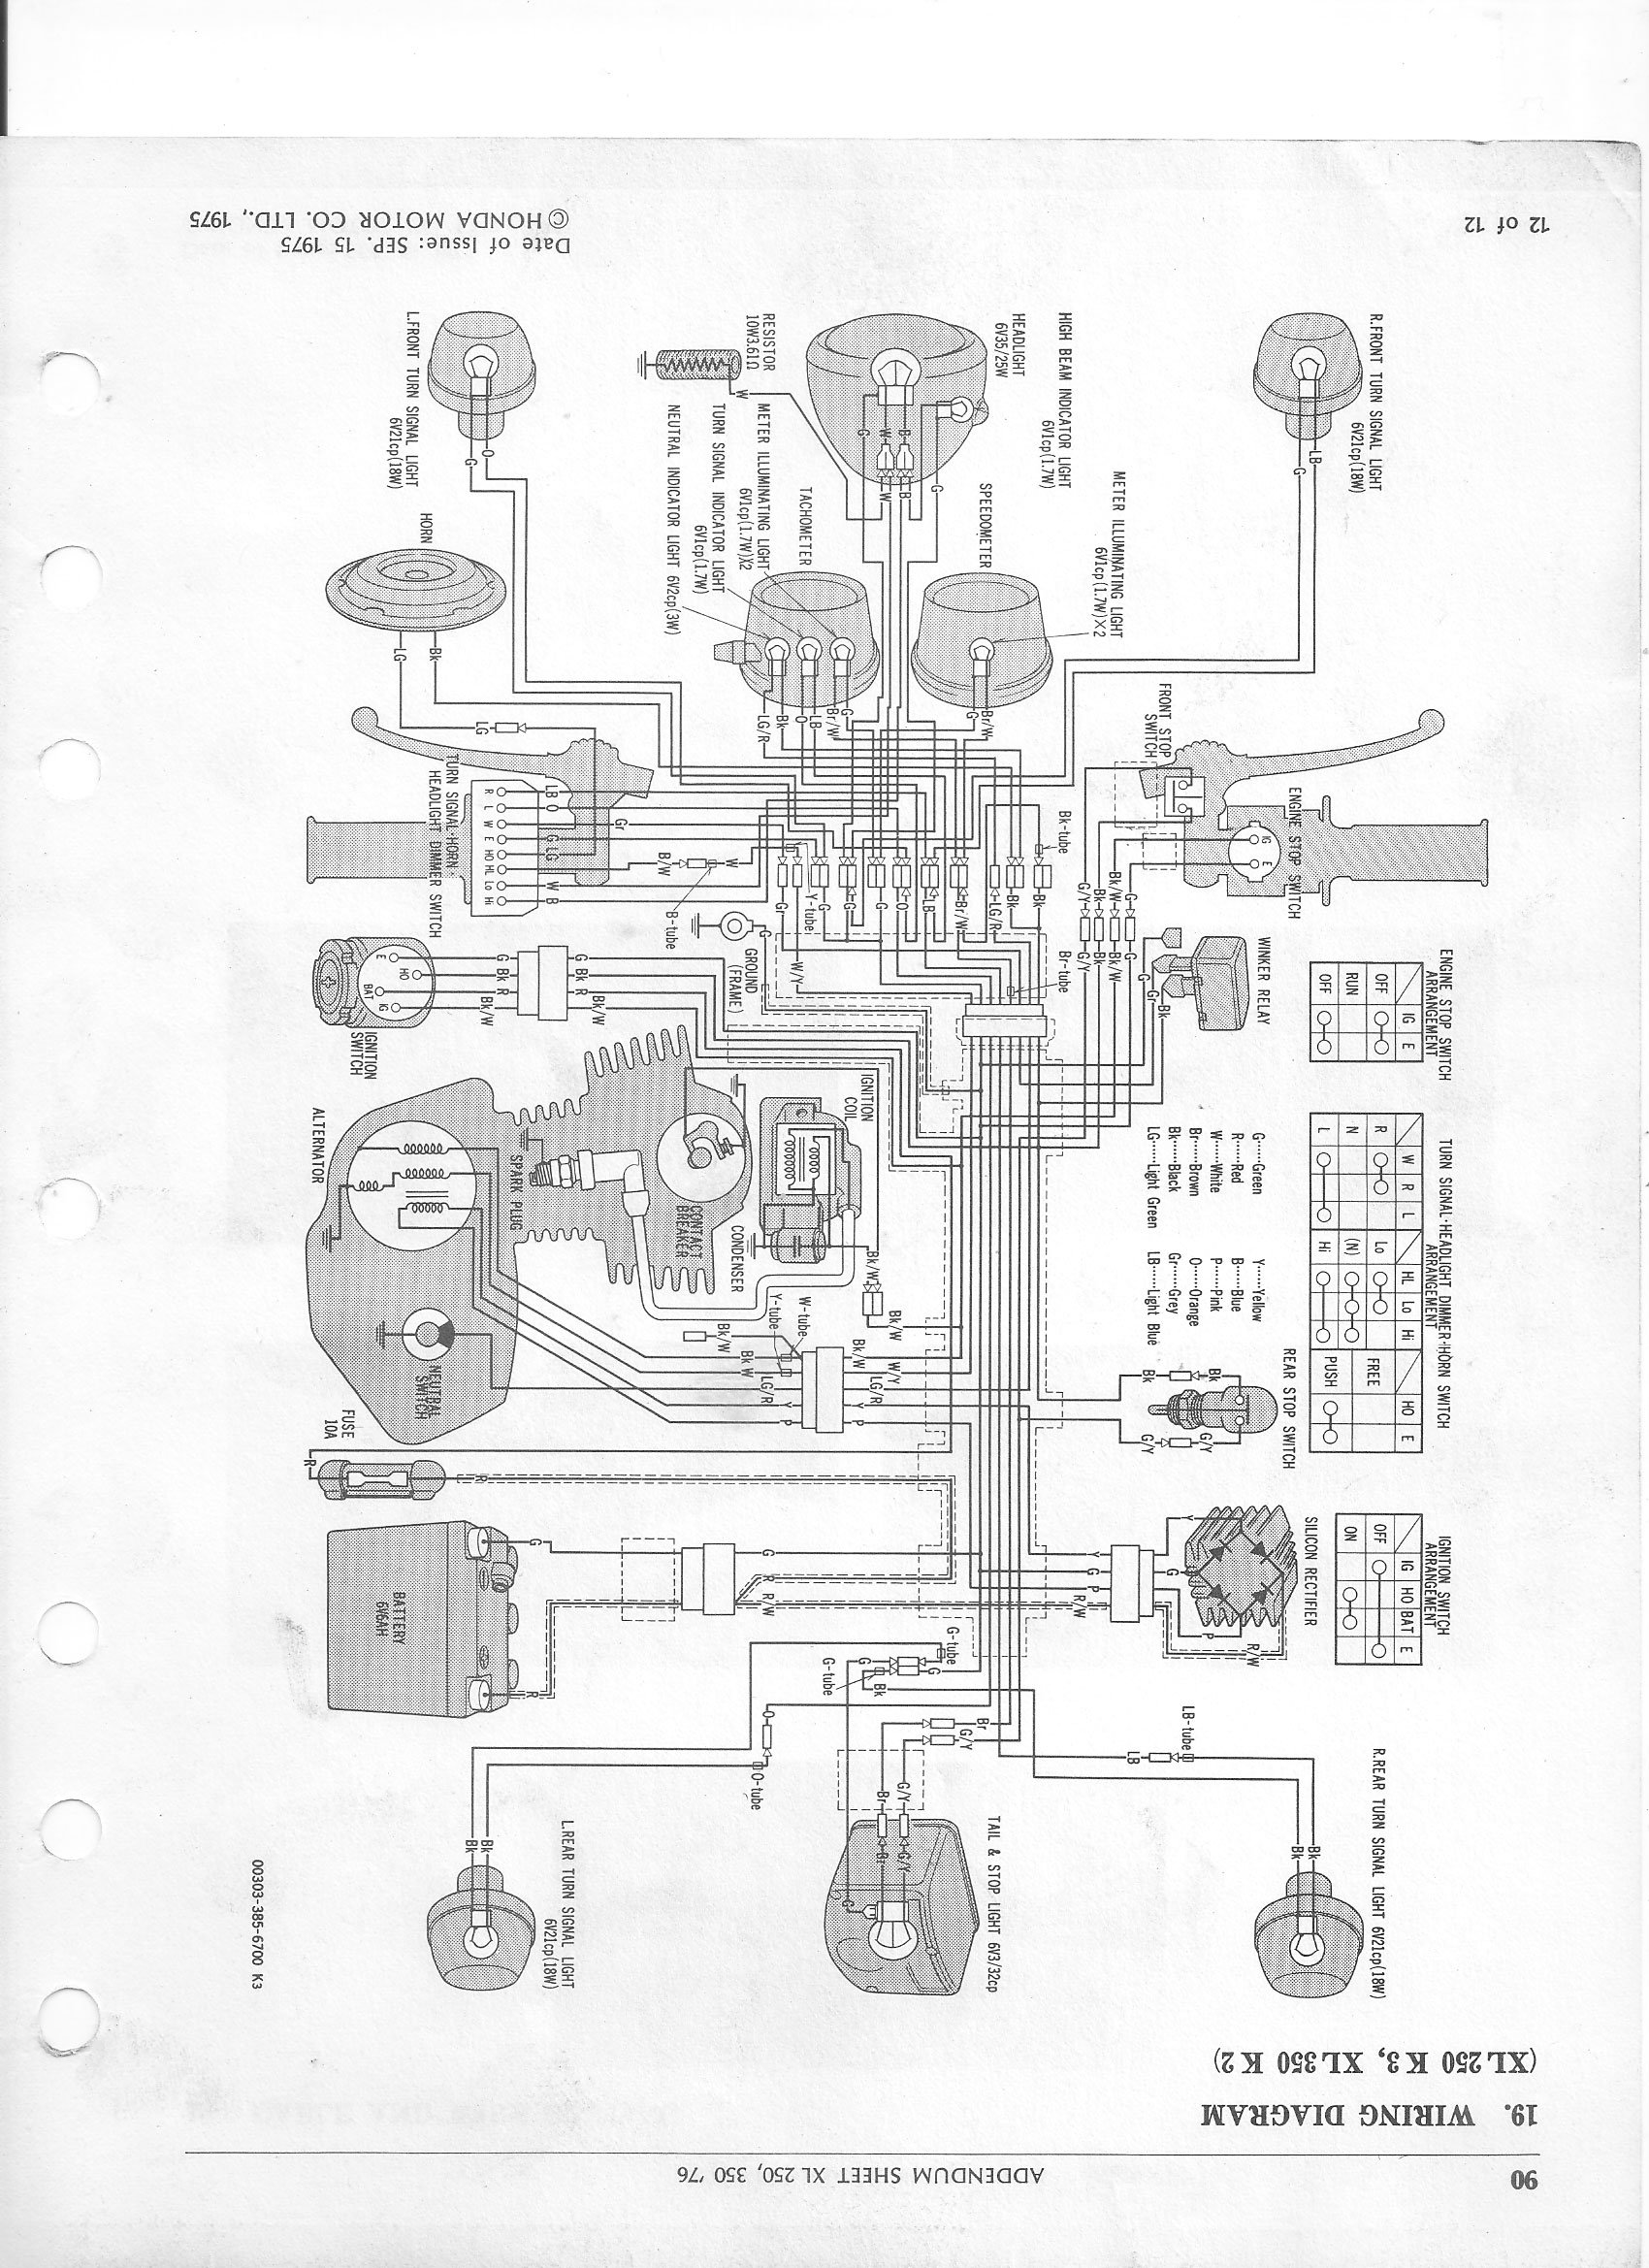 1972 honda cb450 wiring diagram